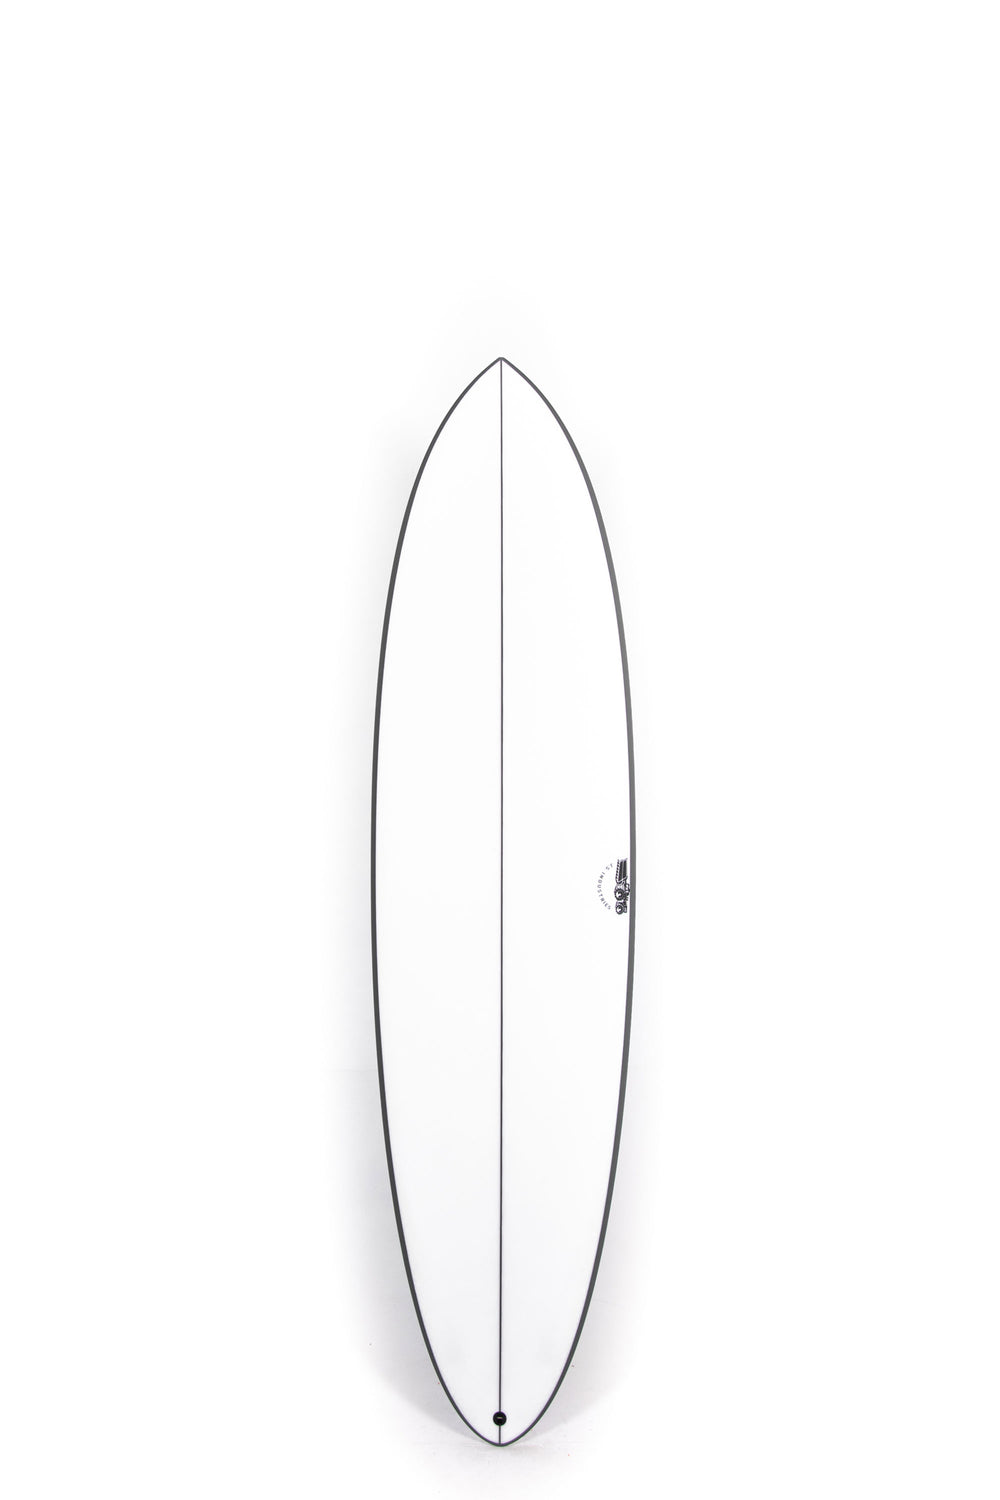 Pukas Surf Shop - JS Surfboards - EL BARON - 7'0